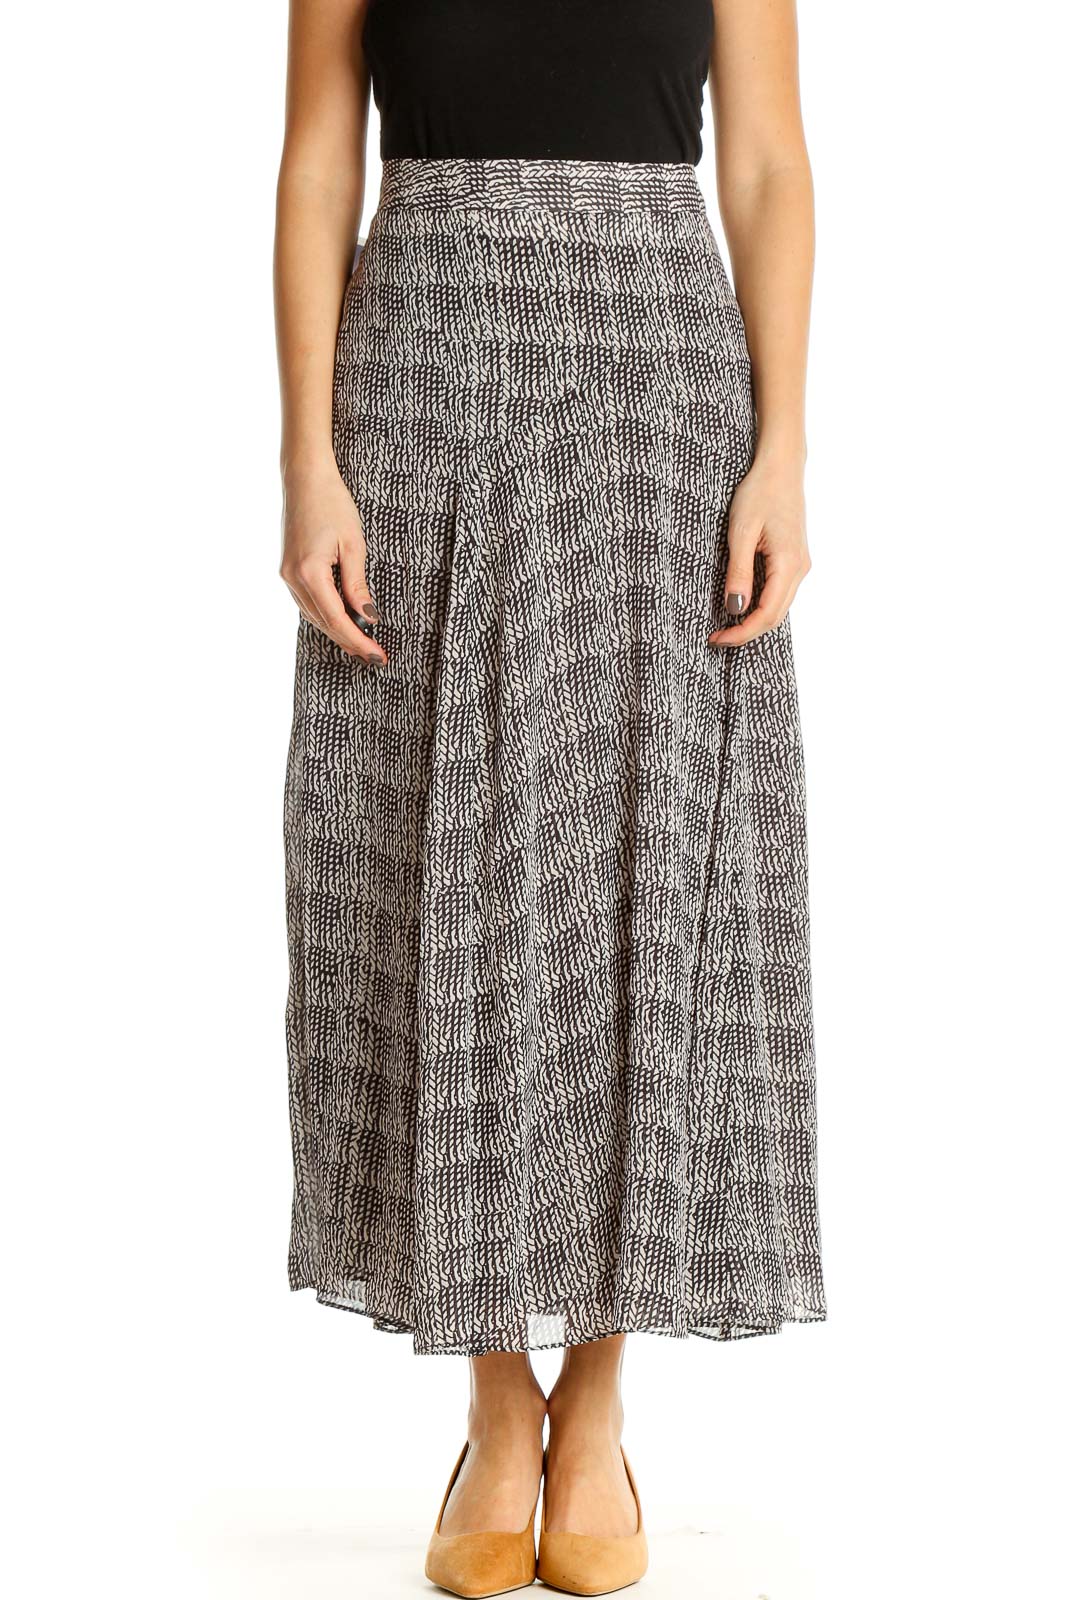 Gray Printed Bohemian Flared Skirt Front